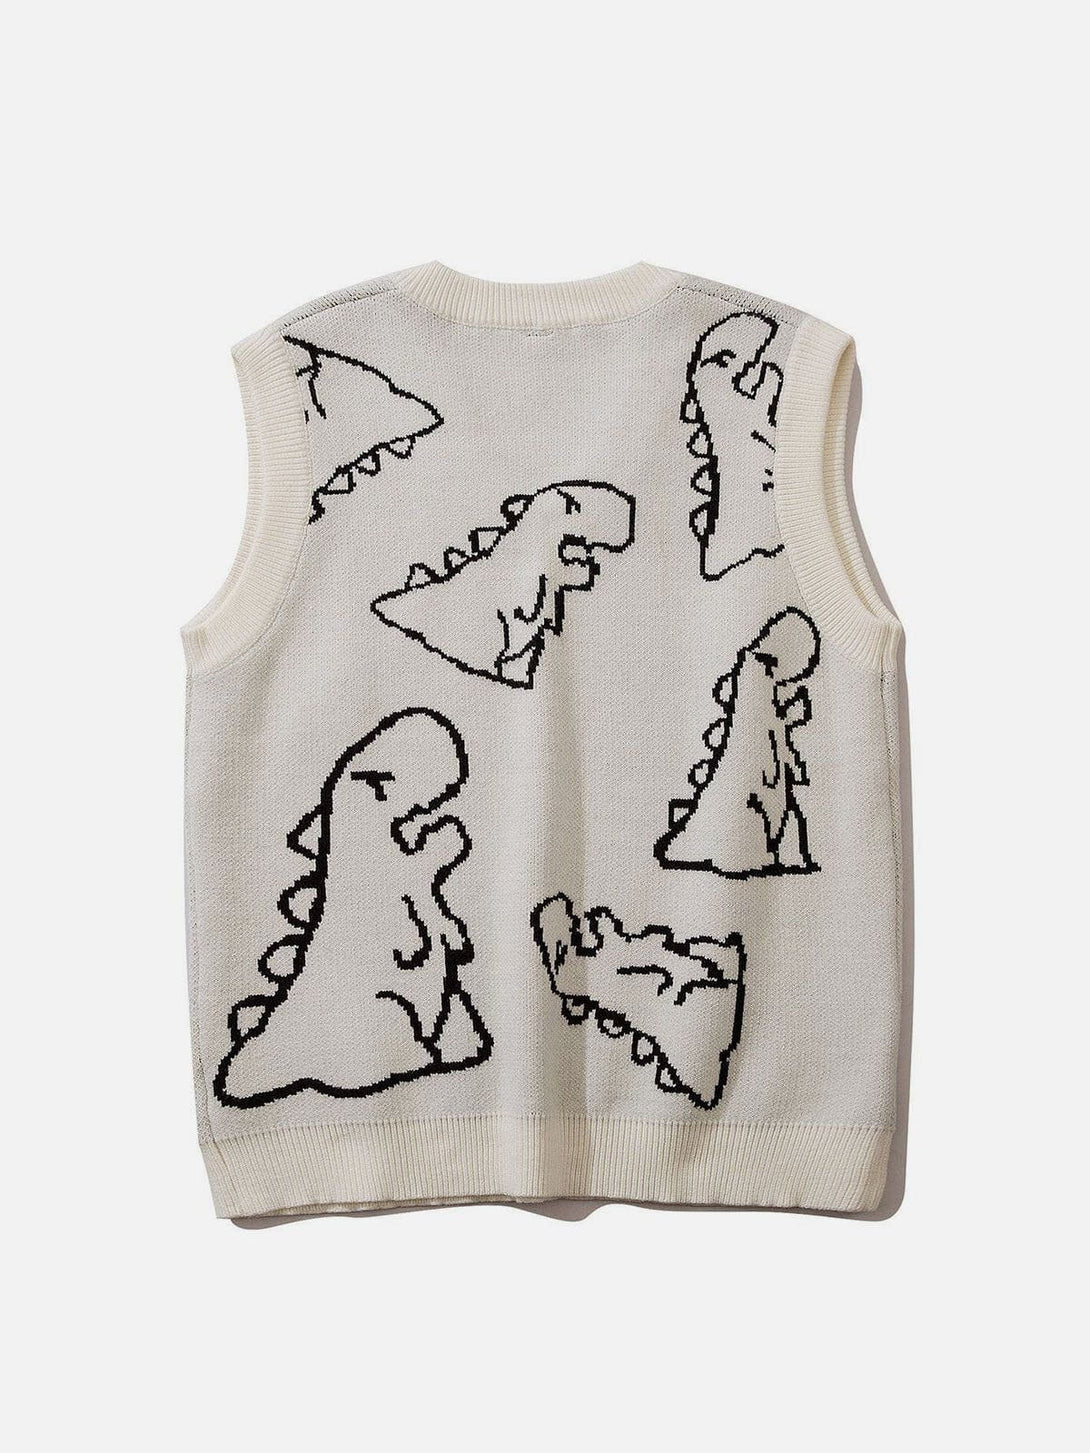 Majesda® - Little Dinosaur Graphic Sweater Vest outfit ideas streetwear fashion